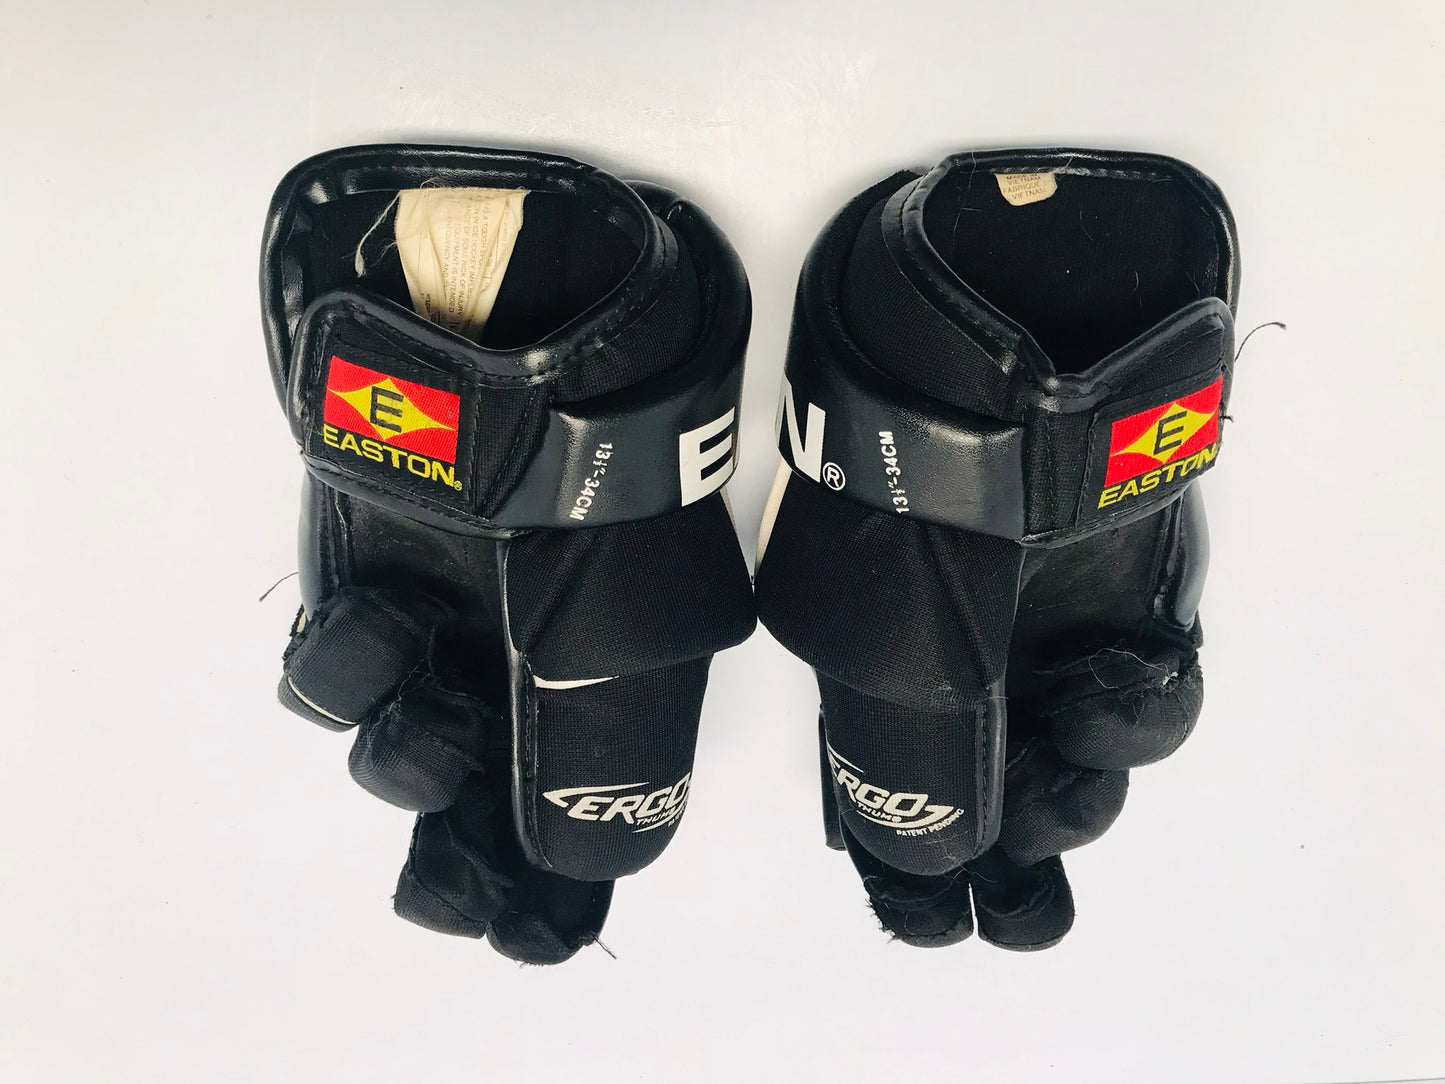 Hockey Gloves Men's Size 13.5 inch Easton Black White Excellent